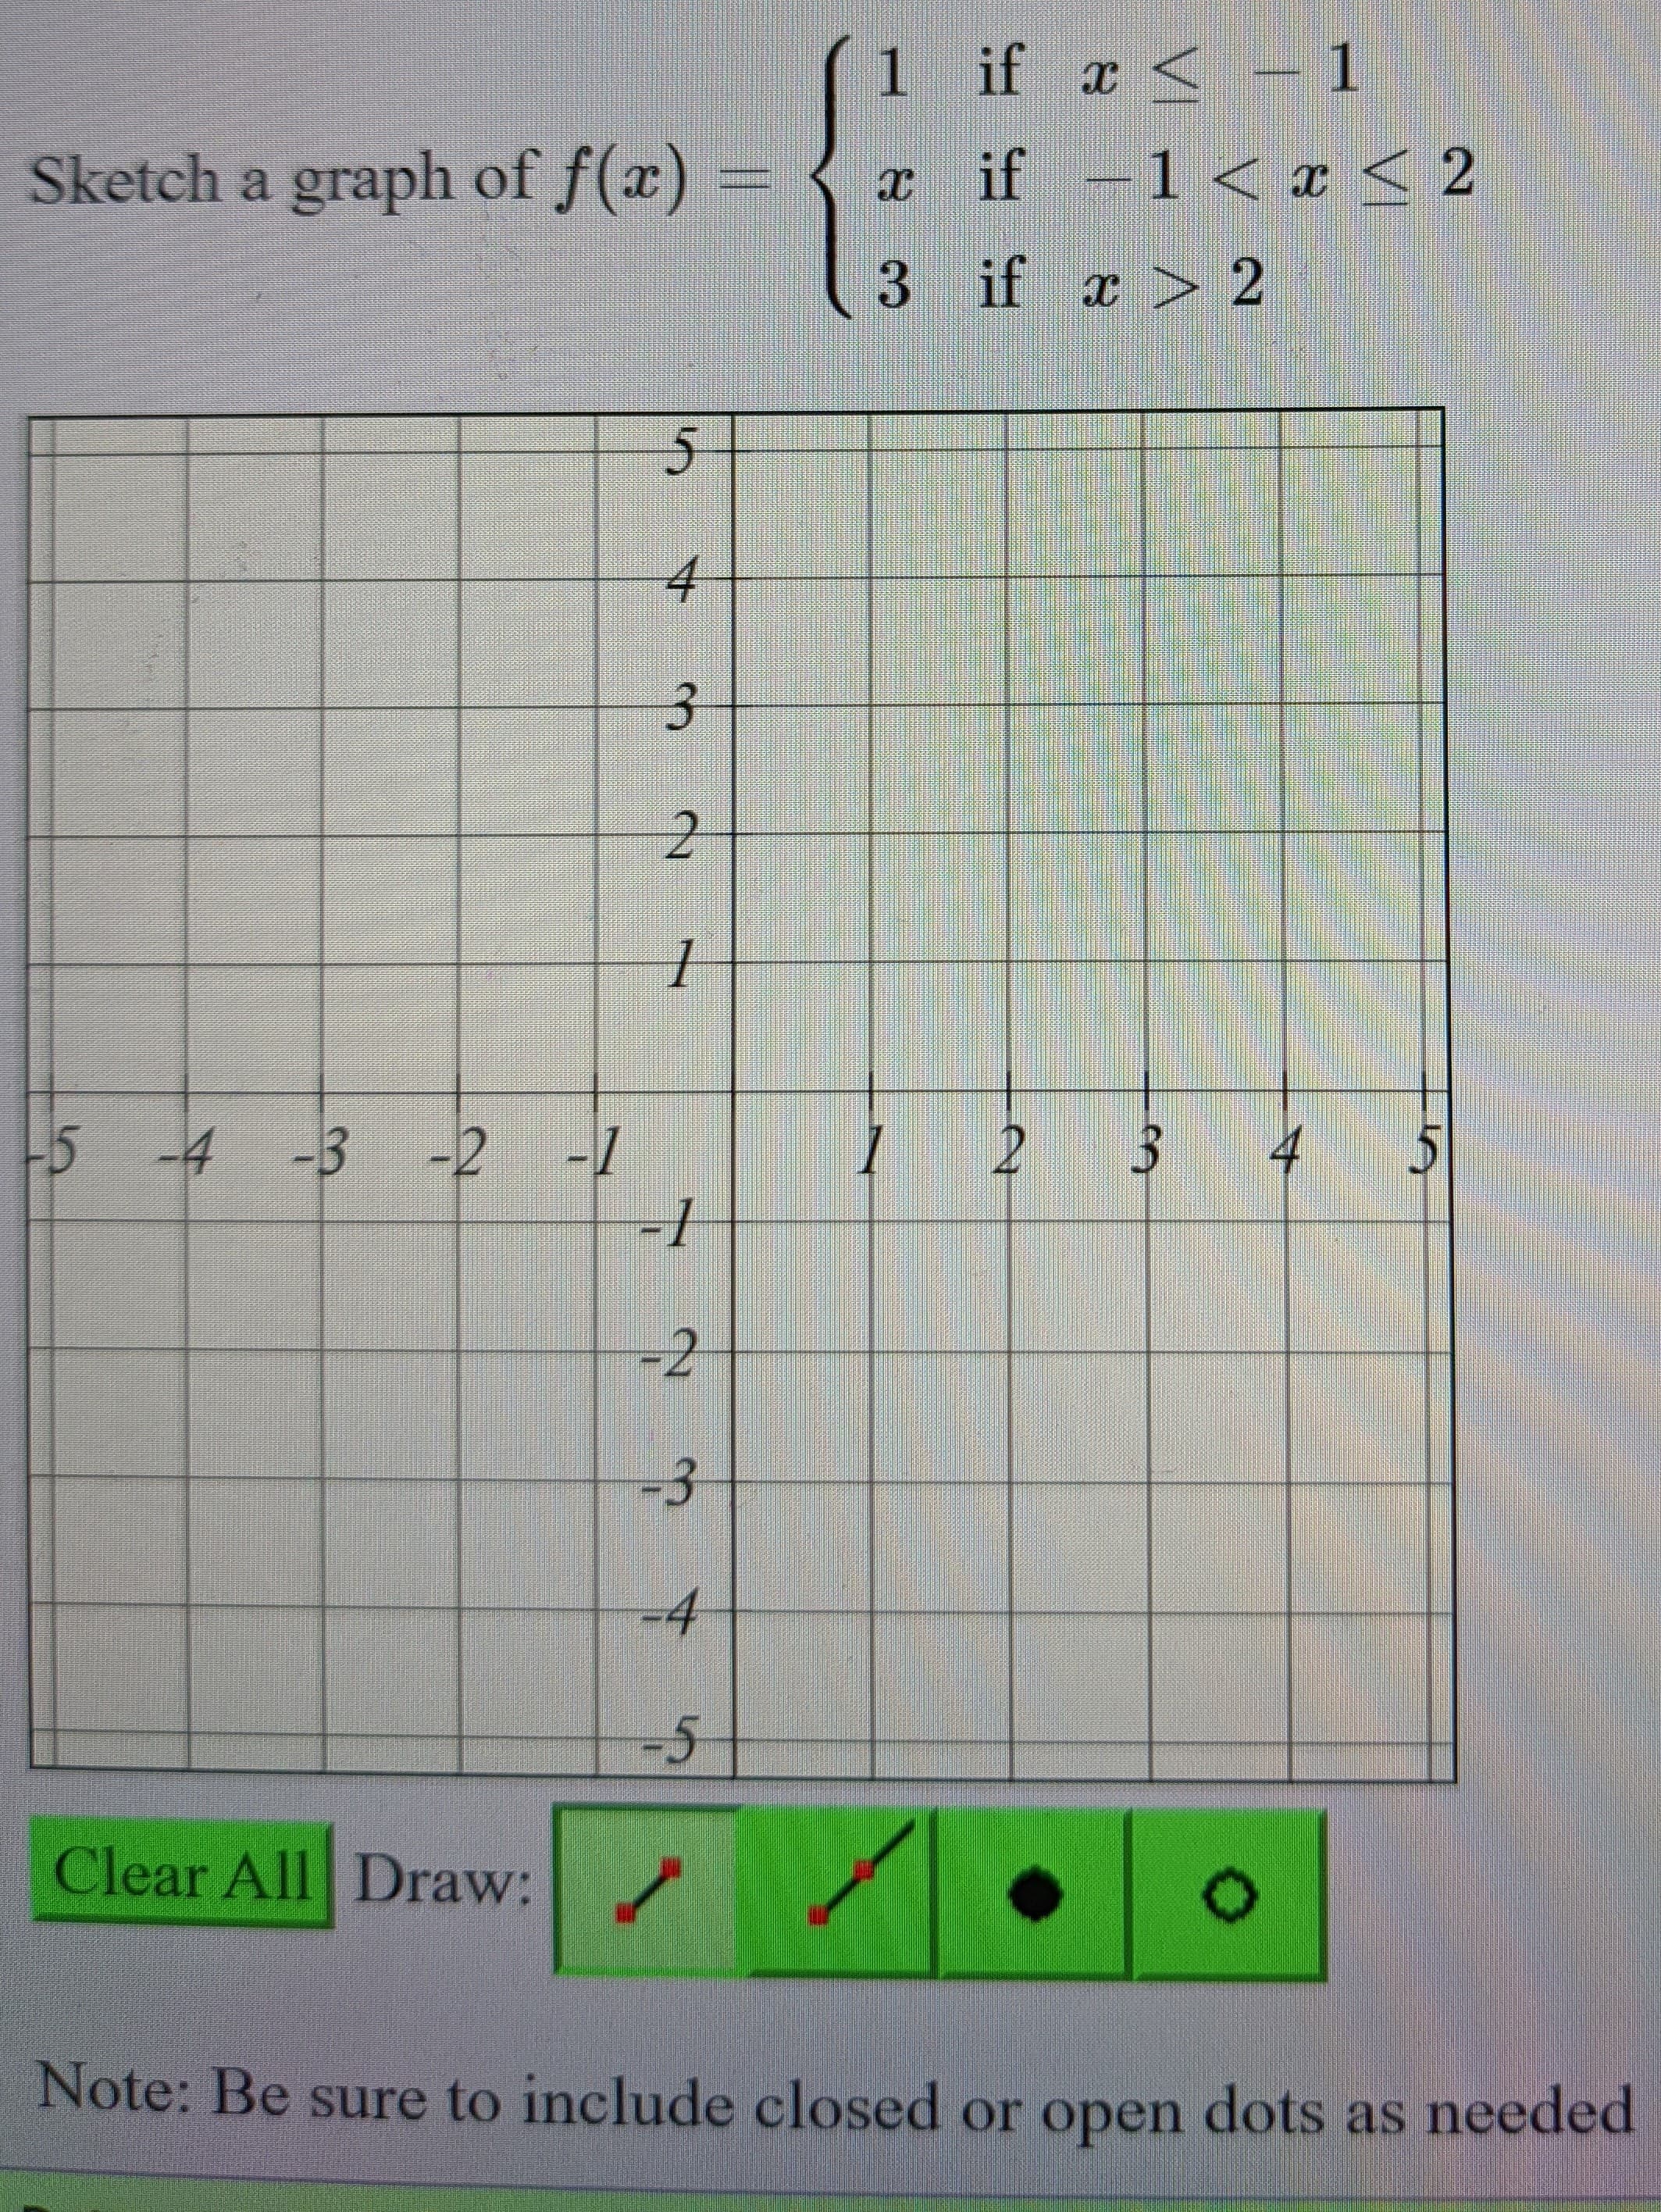 Sketch a graph of f(x)
